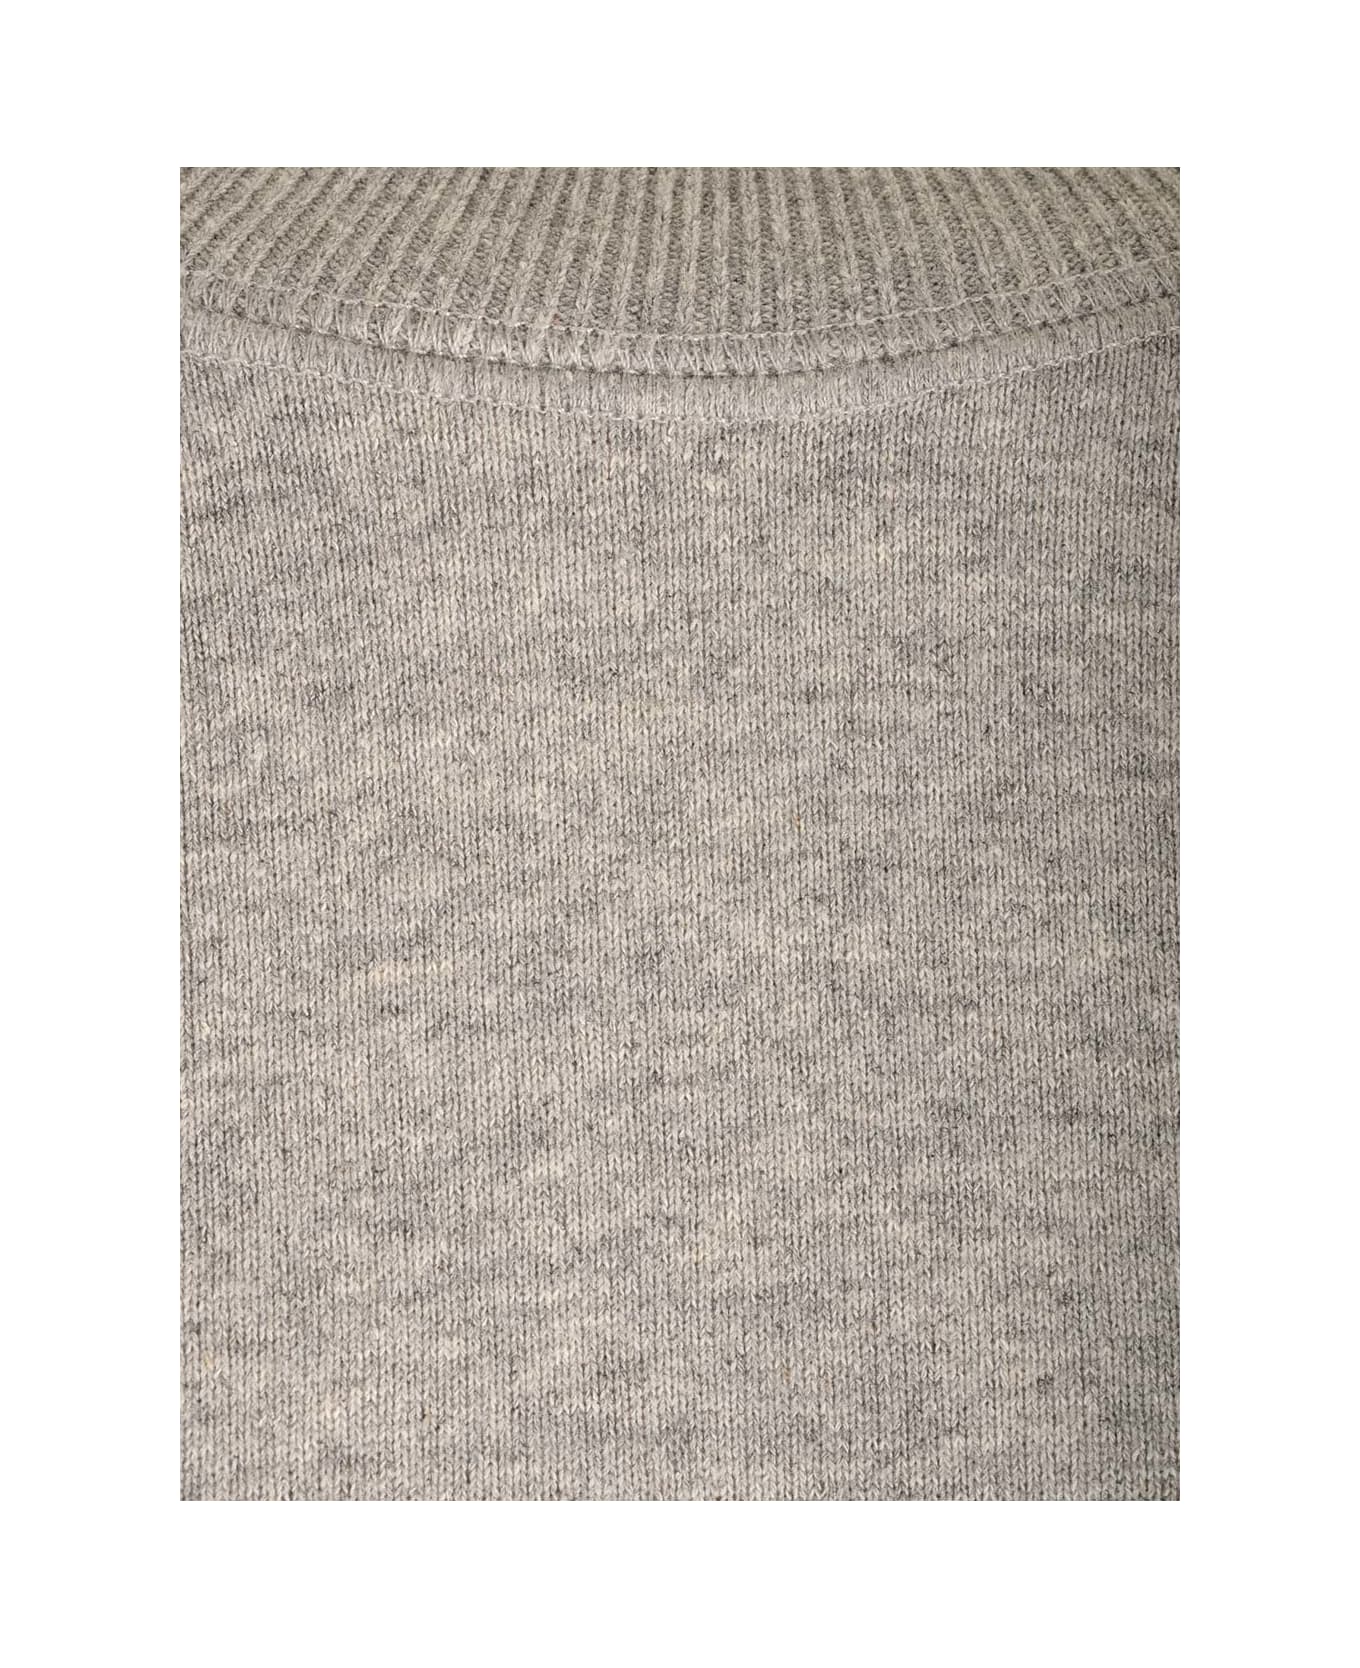 Autry Crew-neck Sweatshirt With Logo Patch - Grey